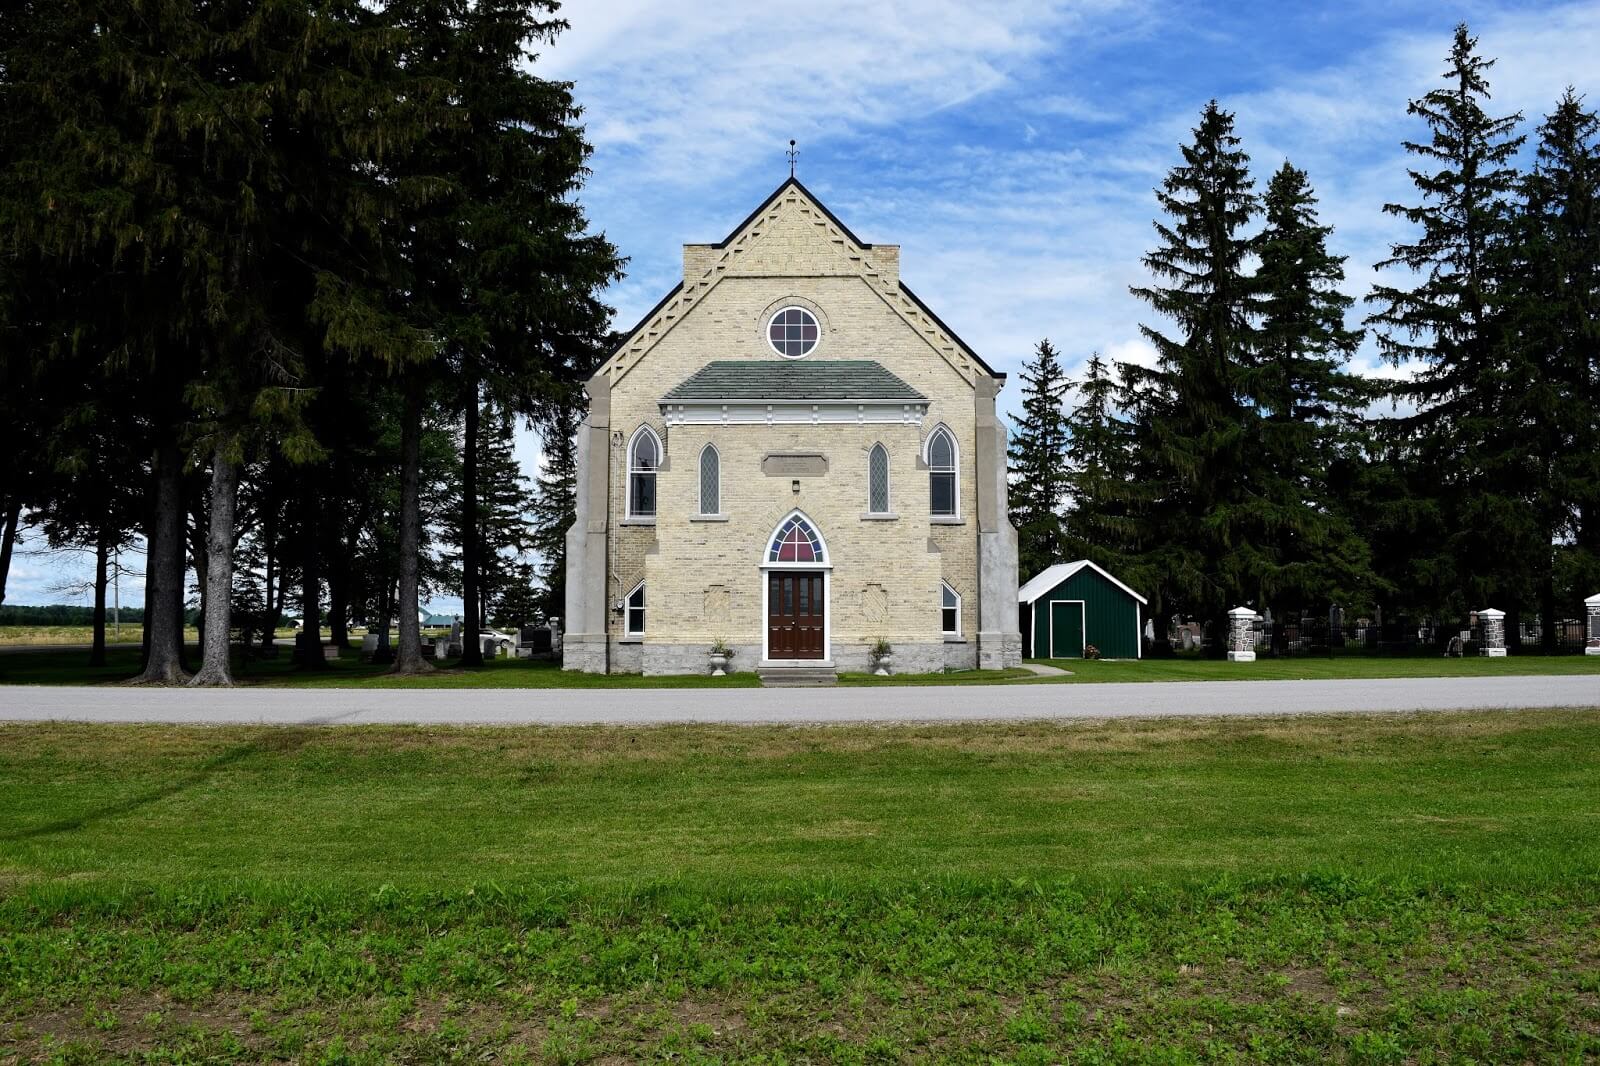 A small, quaint church on the countryside.